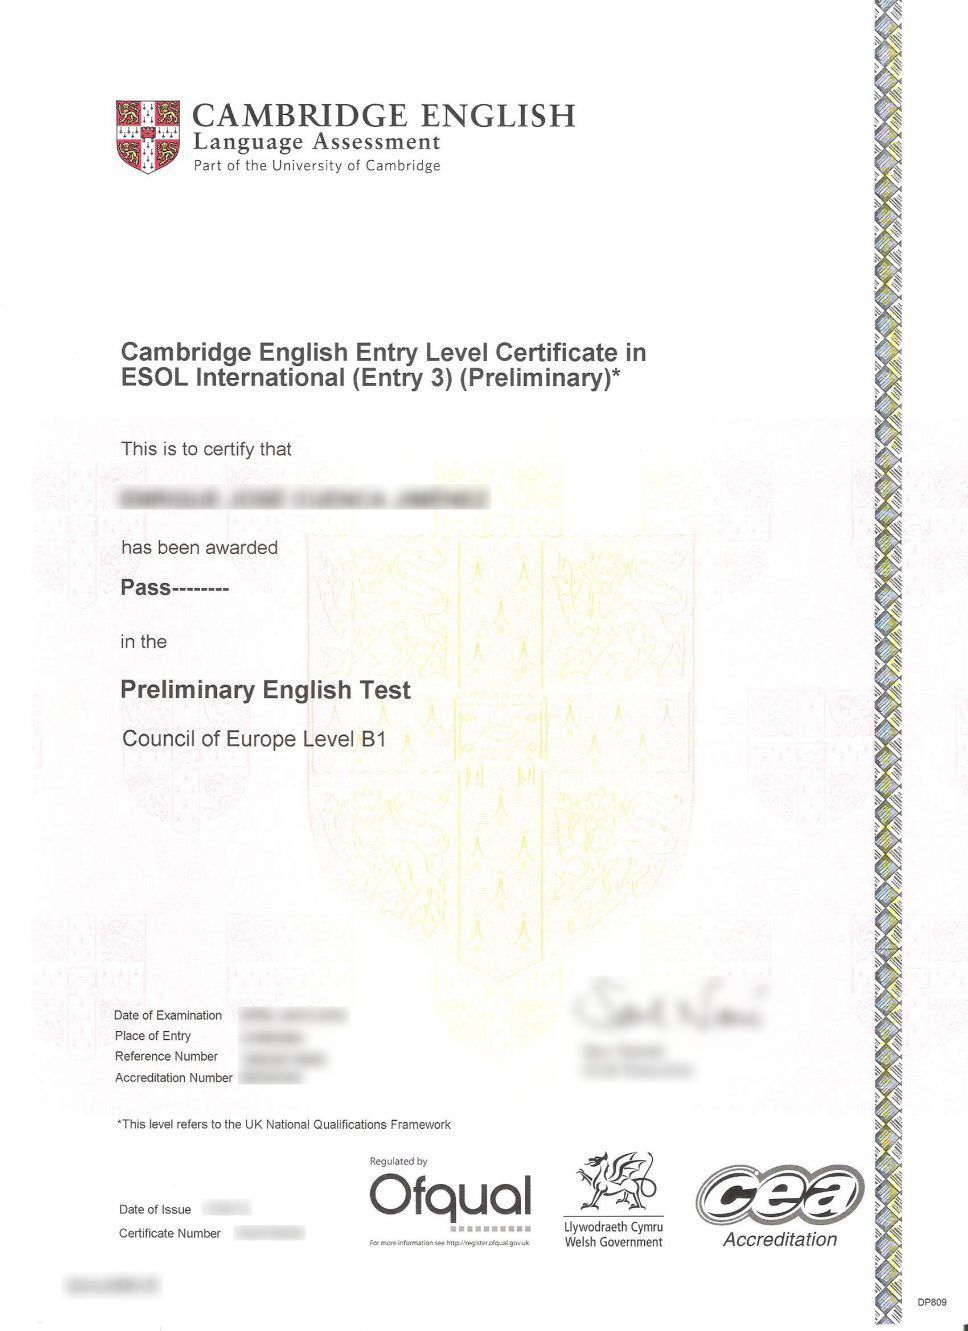 Traducción Jurada de un Título Cambridge English - First Certificate in English (FCE)